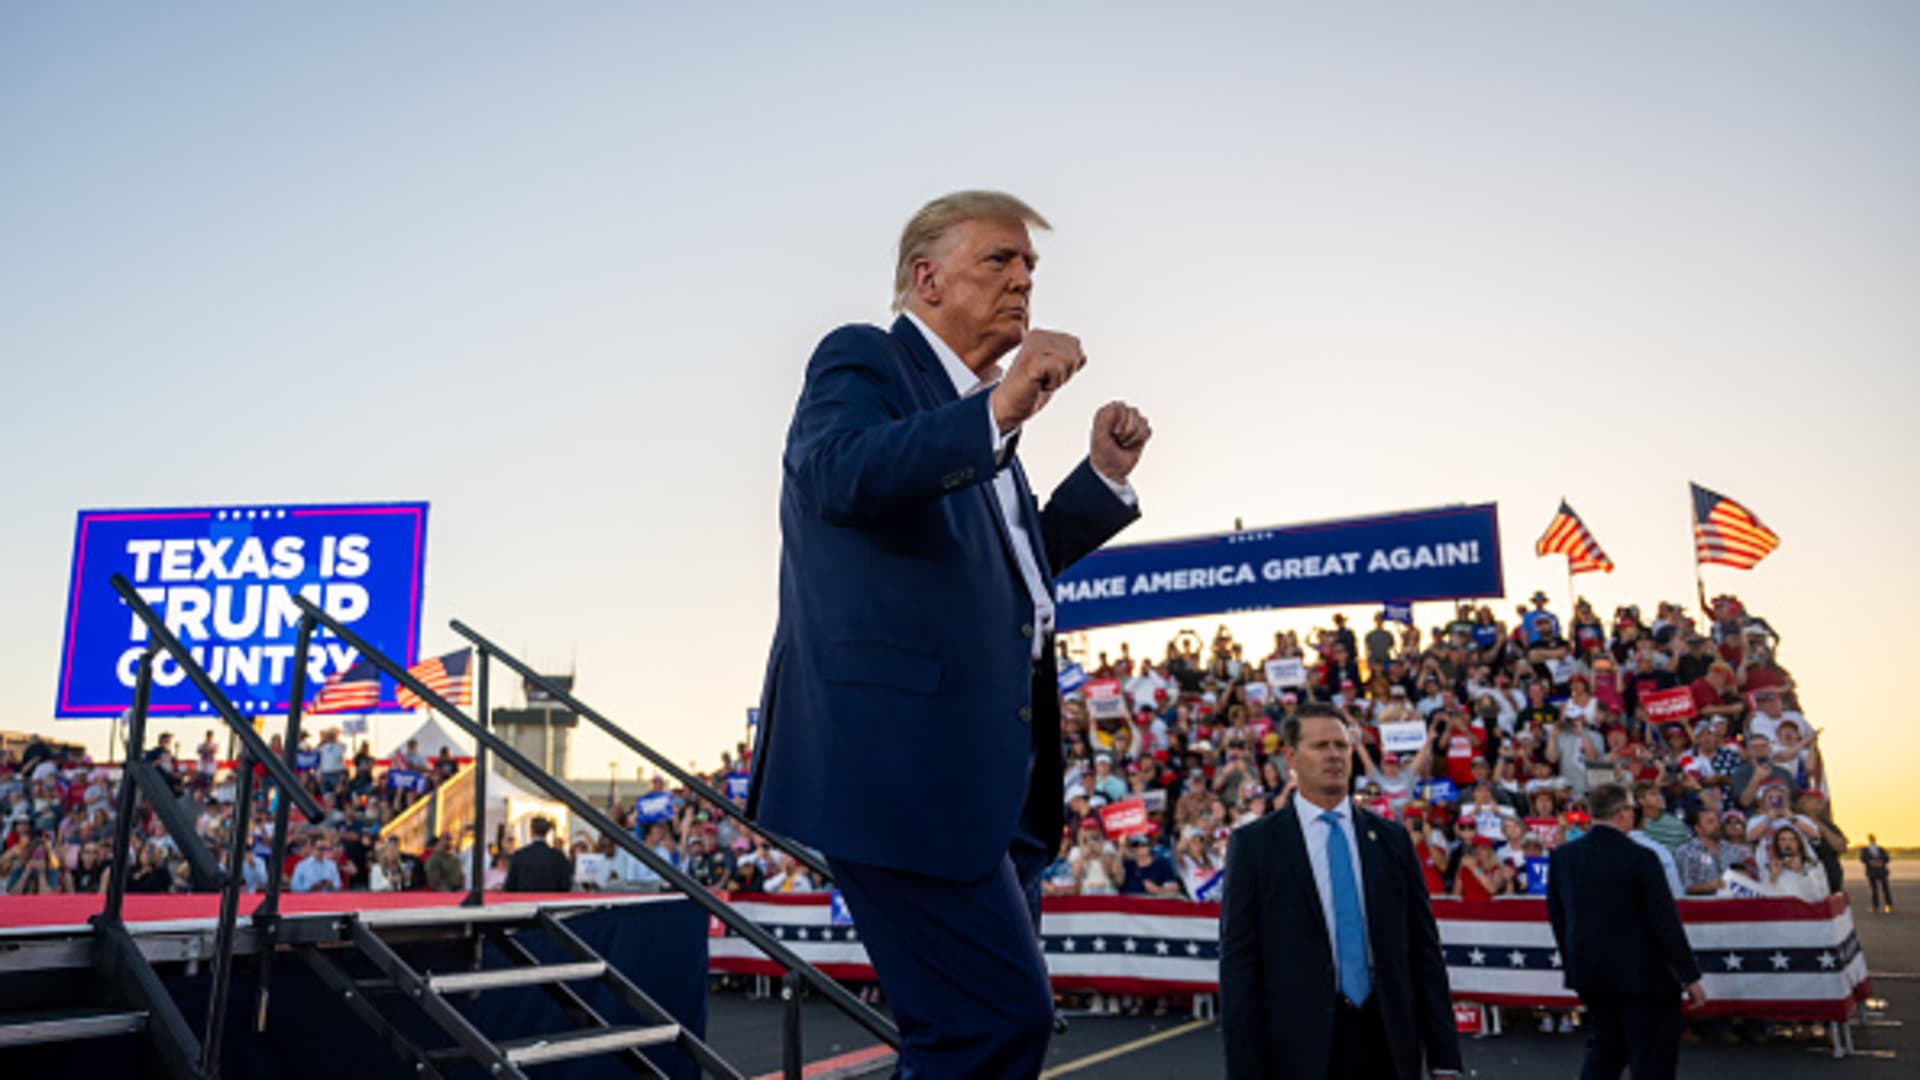 Donald Trump campaign rally at Waco Texas